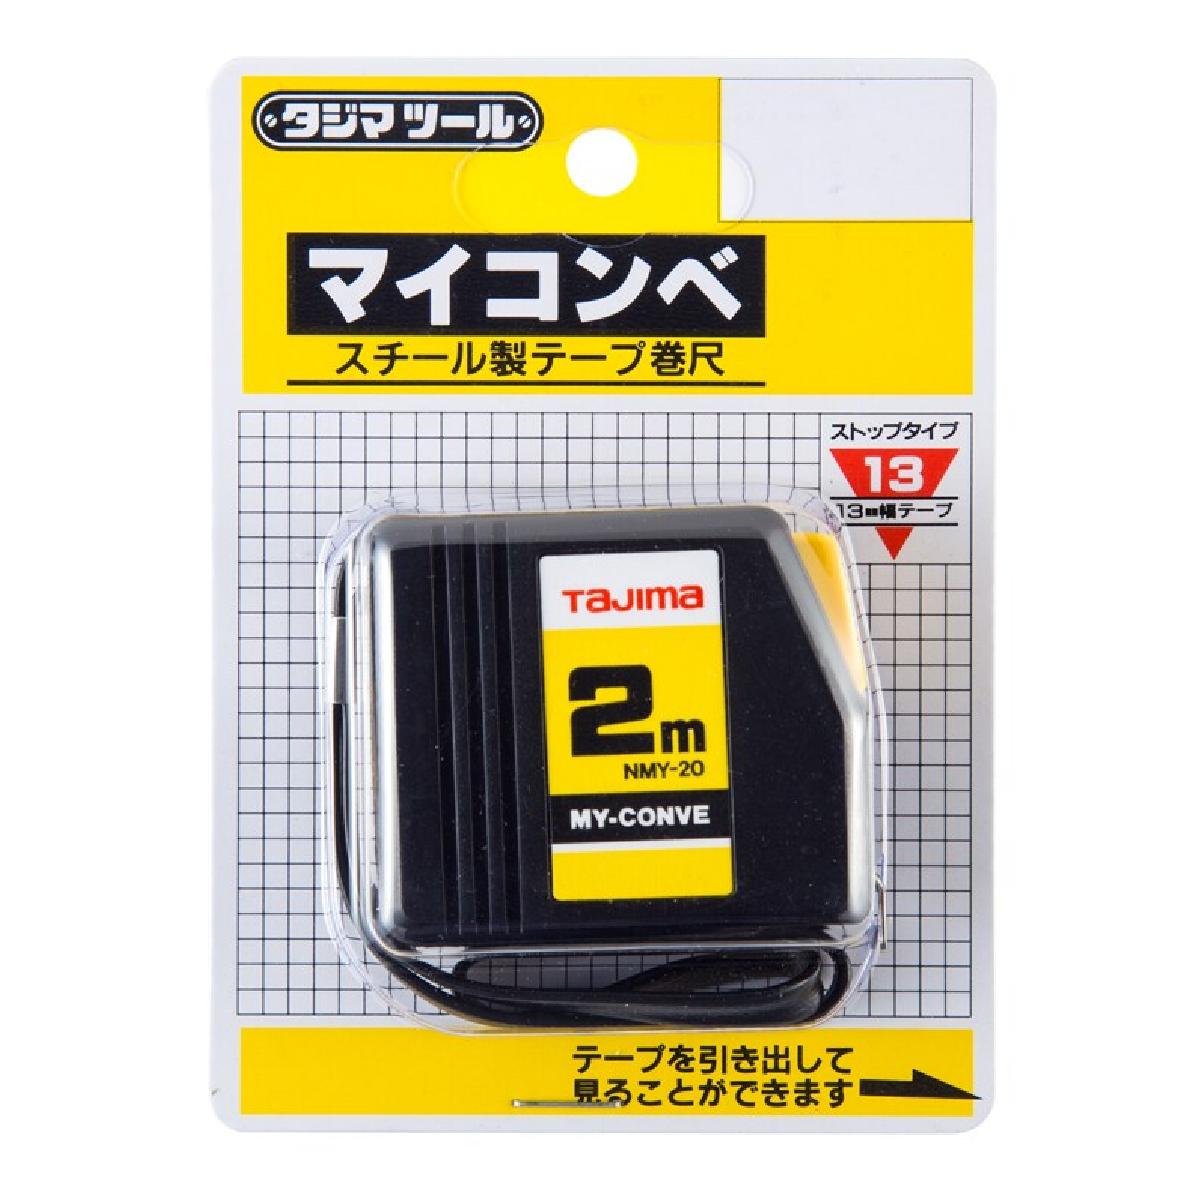 Tajima MY-CONVE 2M/6FT Short Steel AUTO-STOP Measuring Tape